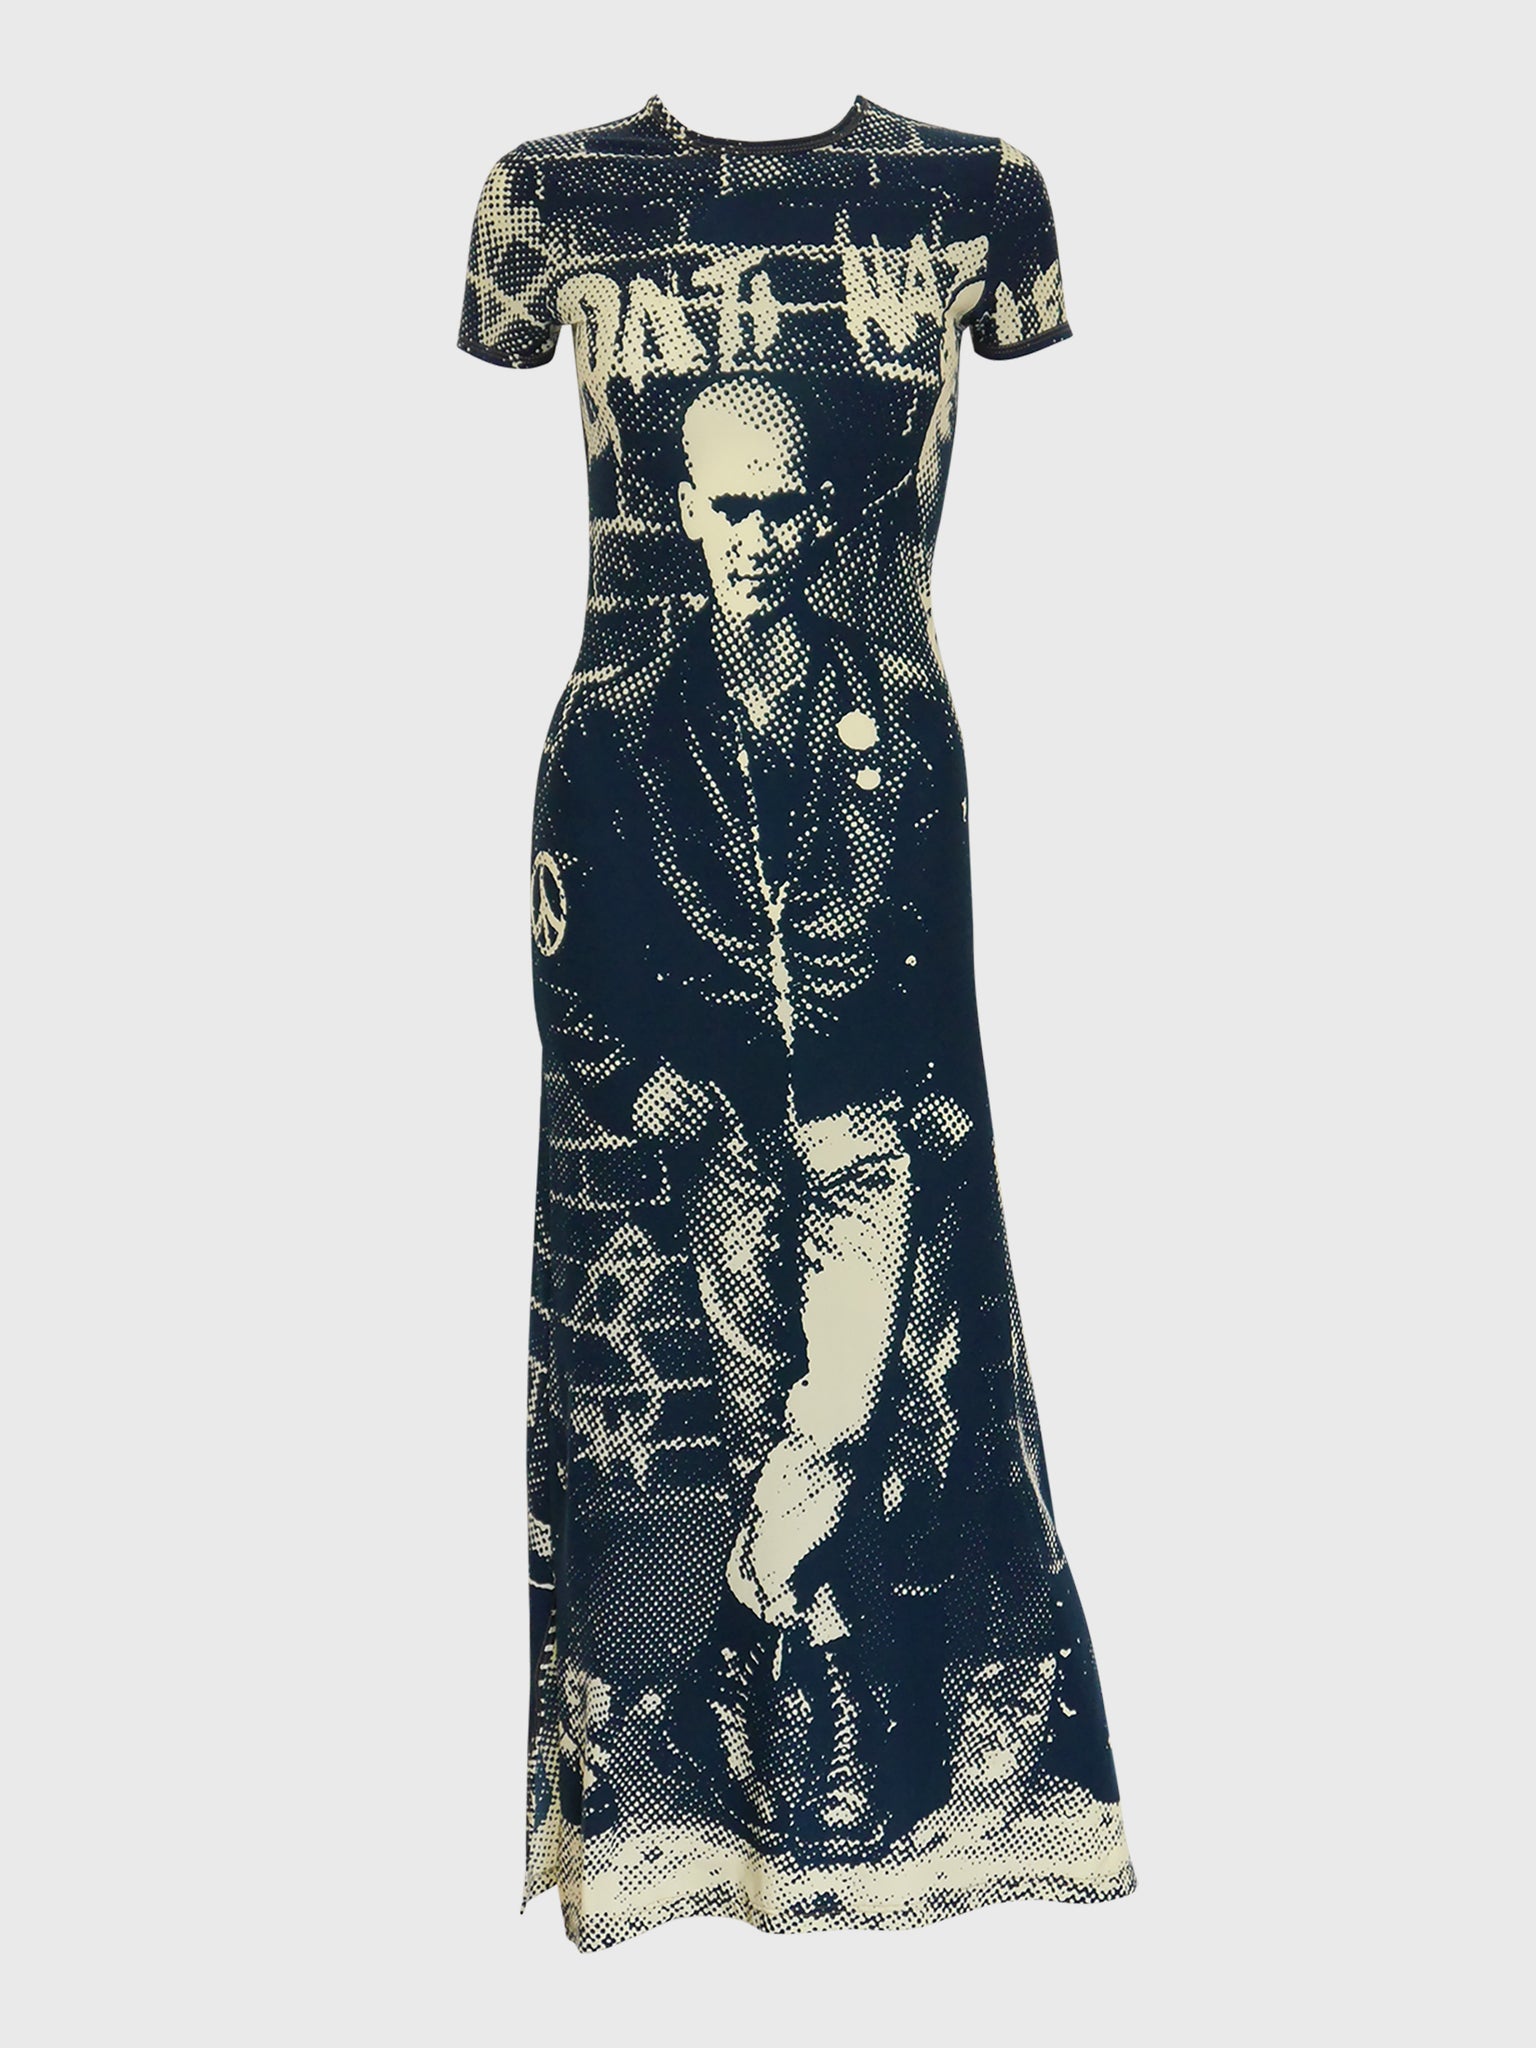 JEAN PAUL GAULTIER Fall 1997 Vintage "Fight Racism" Print Maxi Dress